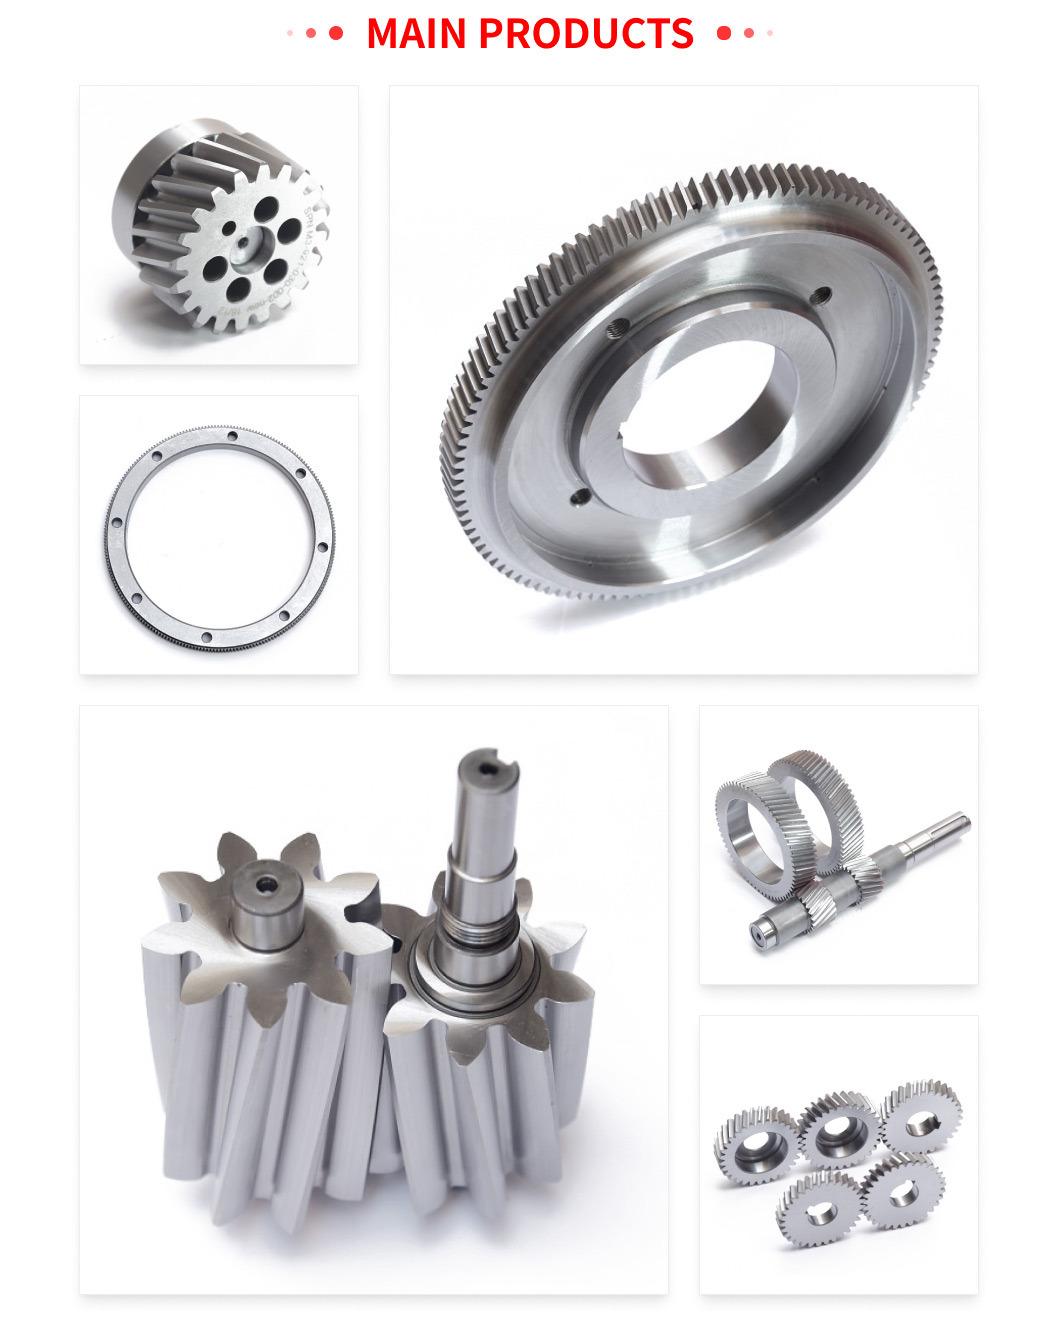 Machinery Circular OEM Hunting Cylindrical Wheel Hard External Shaft Transmission Gear Manufacture